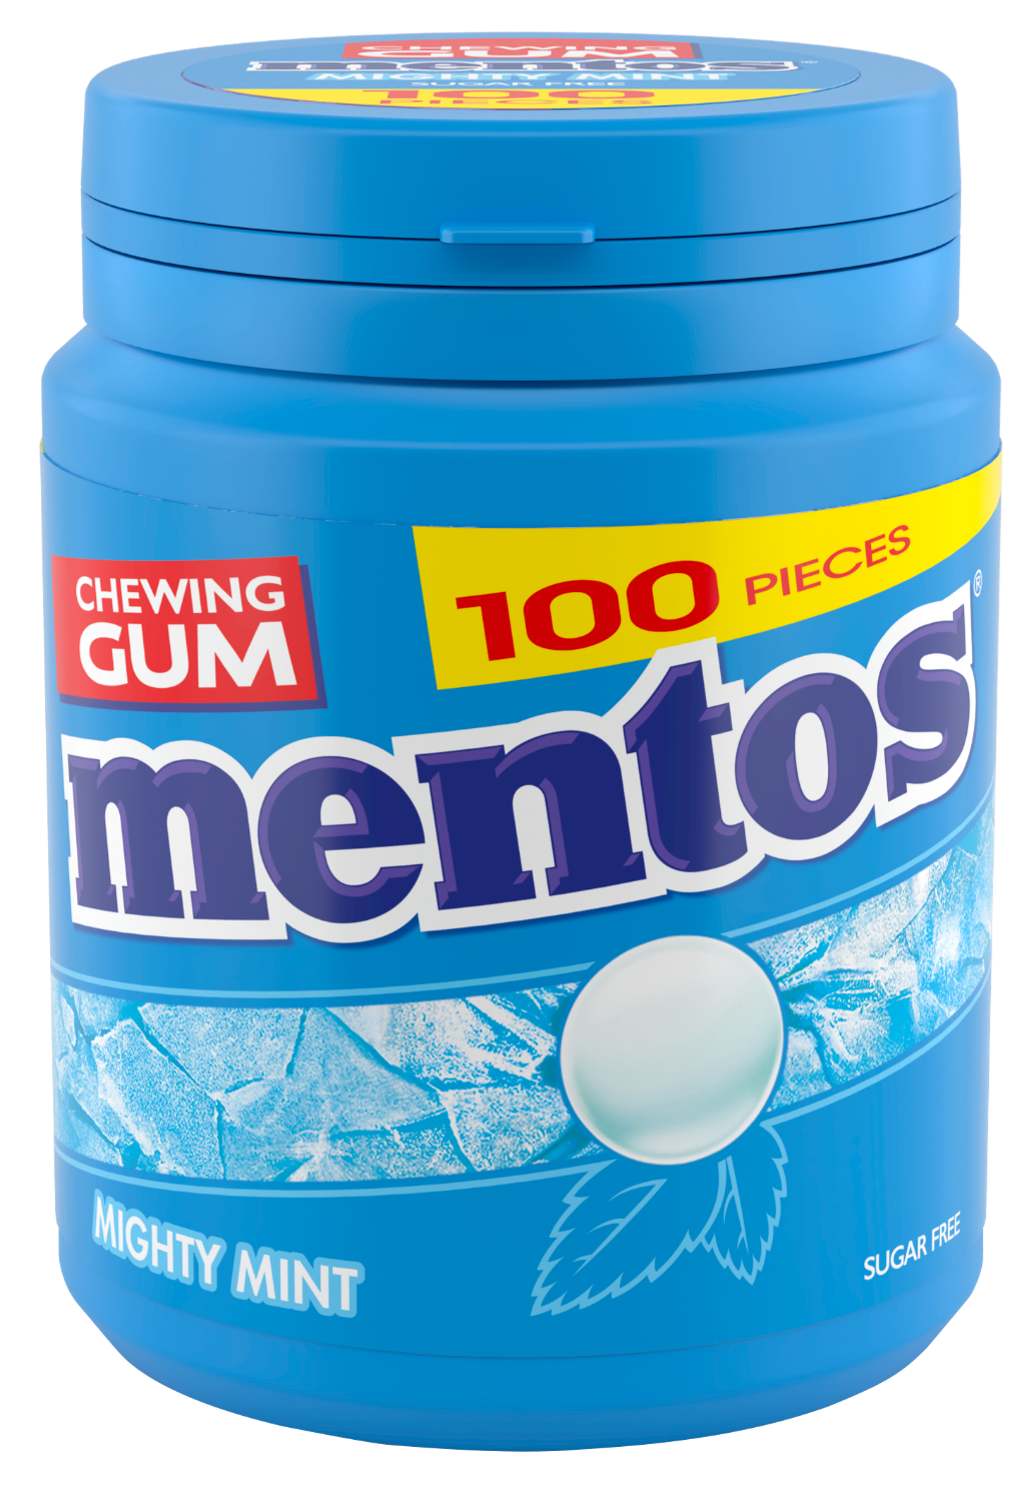 Mentos Gum - Mighty Mint